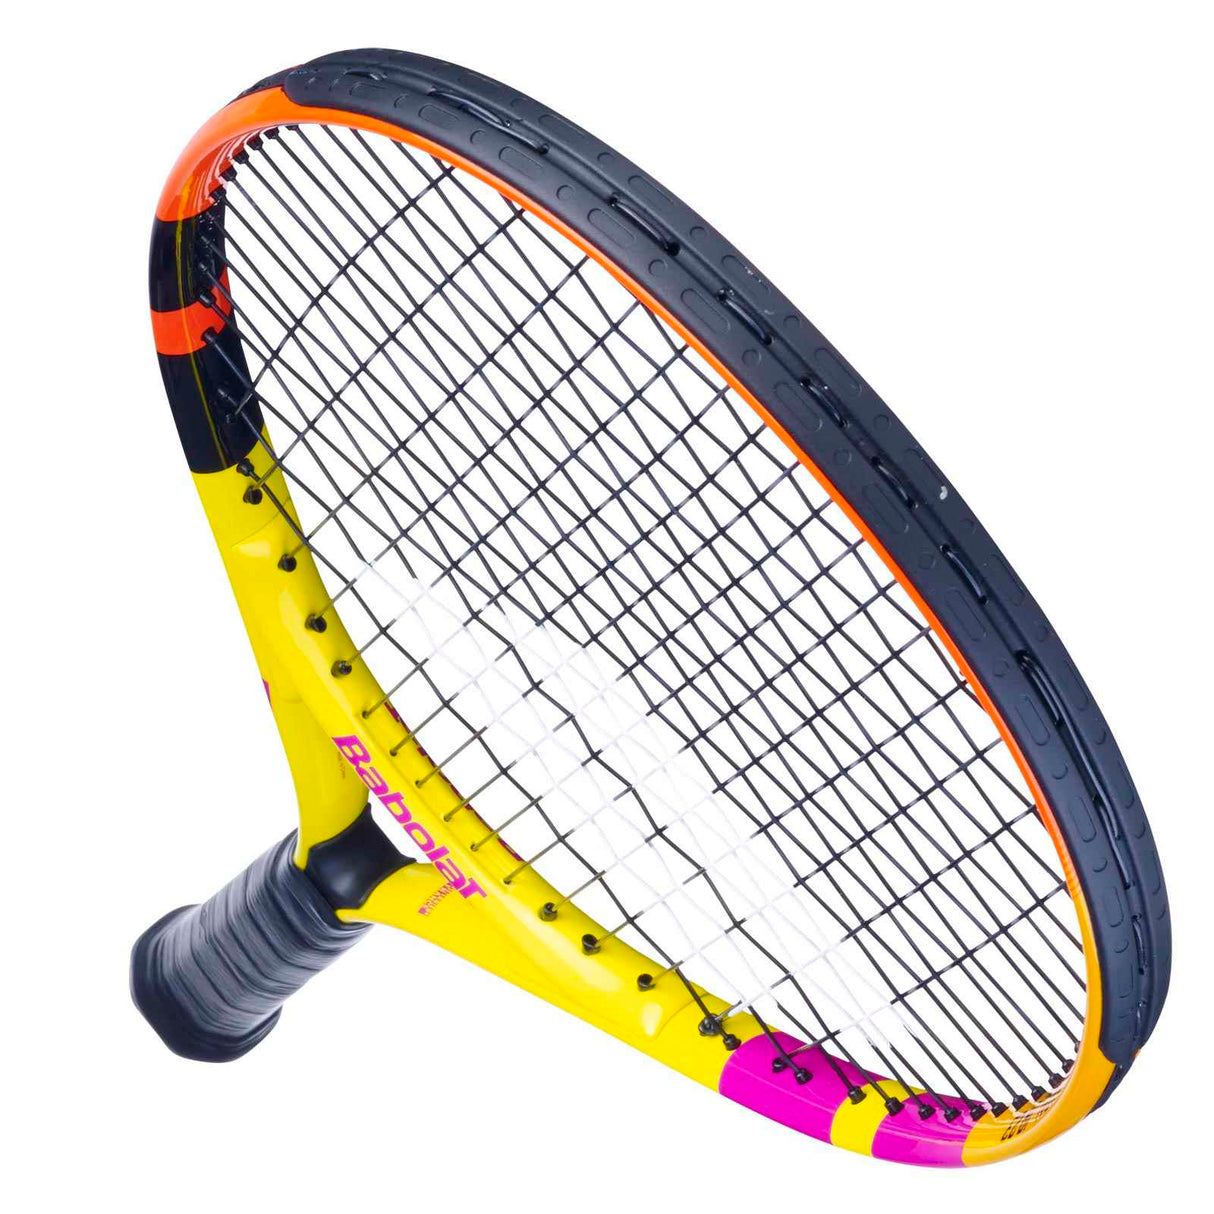 Babolat Nadal Junior 25 Strung Tennis Racket